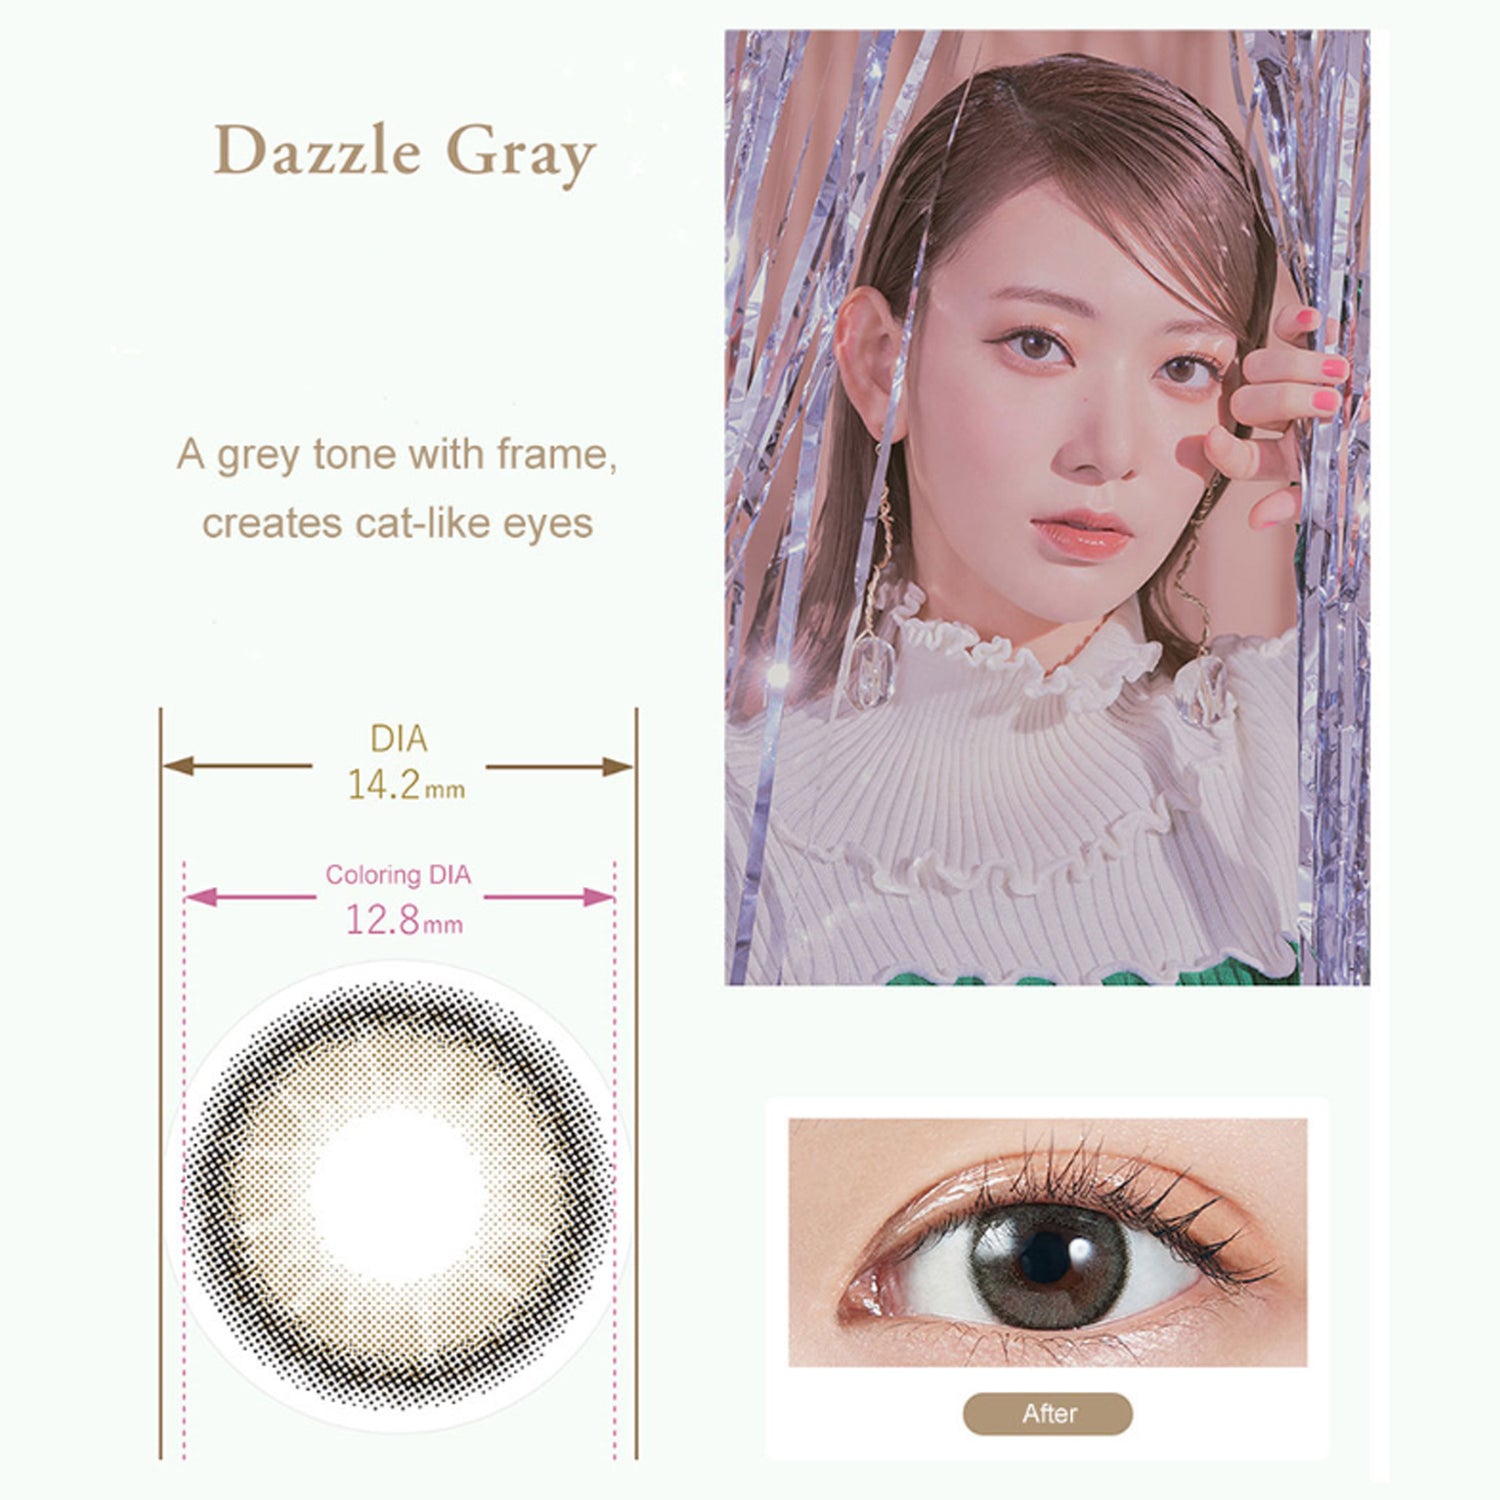 MOLAK 1Day Contact Lenses-Dazzle Gray 10pcs